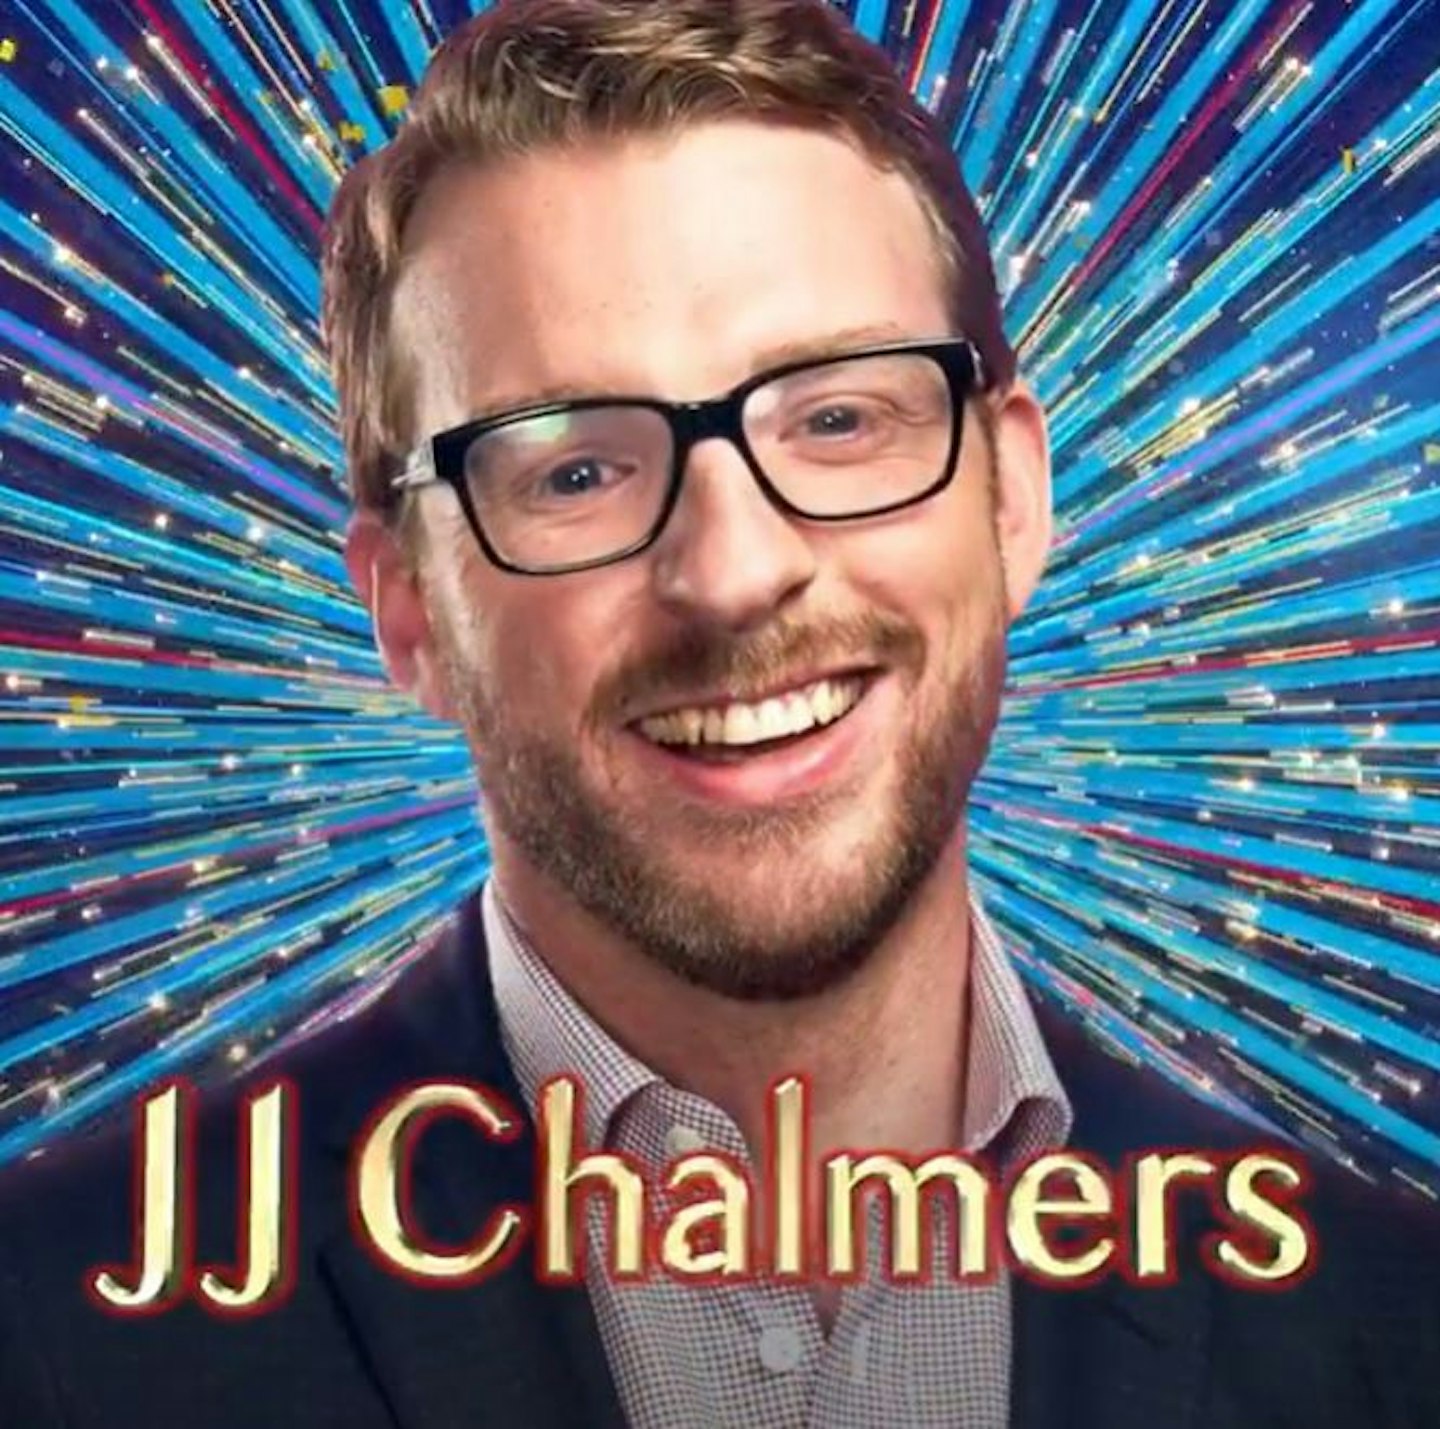 JJ Chalmers